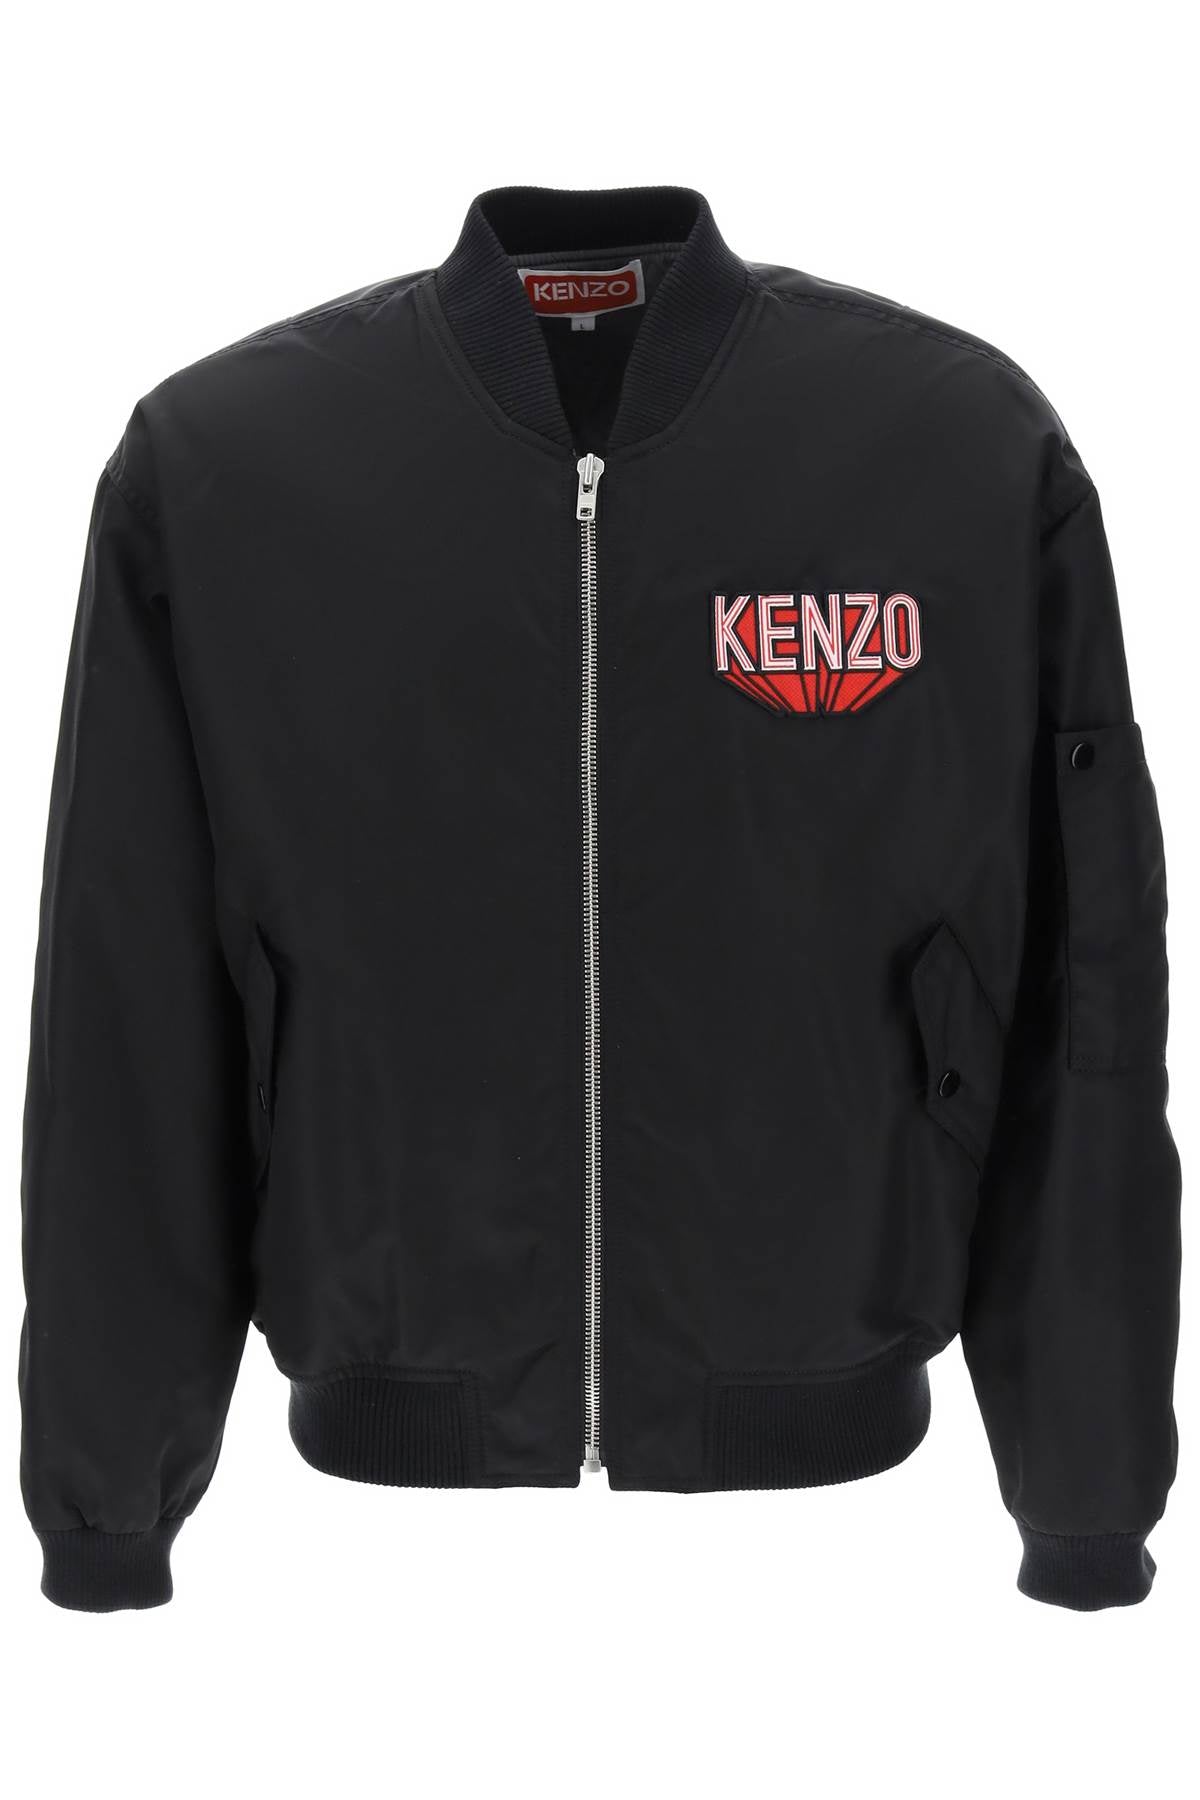 Kenzo kenzo 3d varsity bomber jacket-0